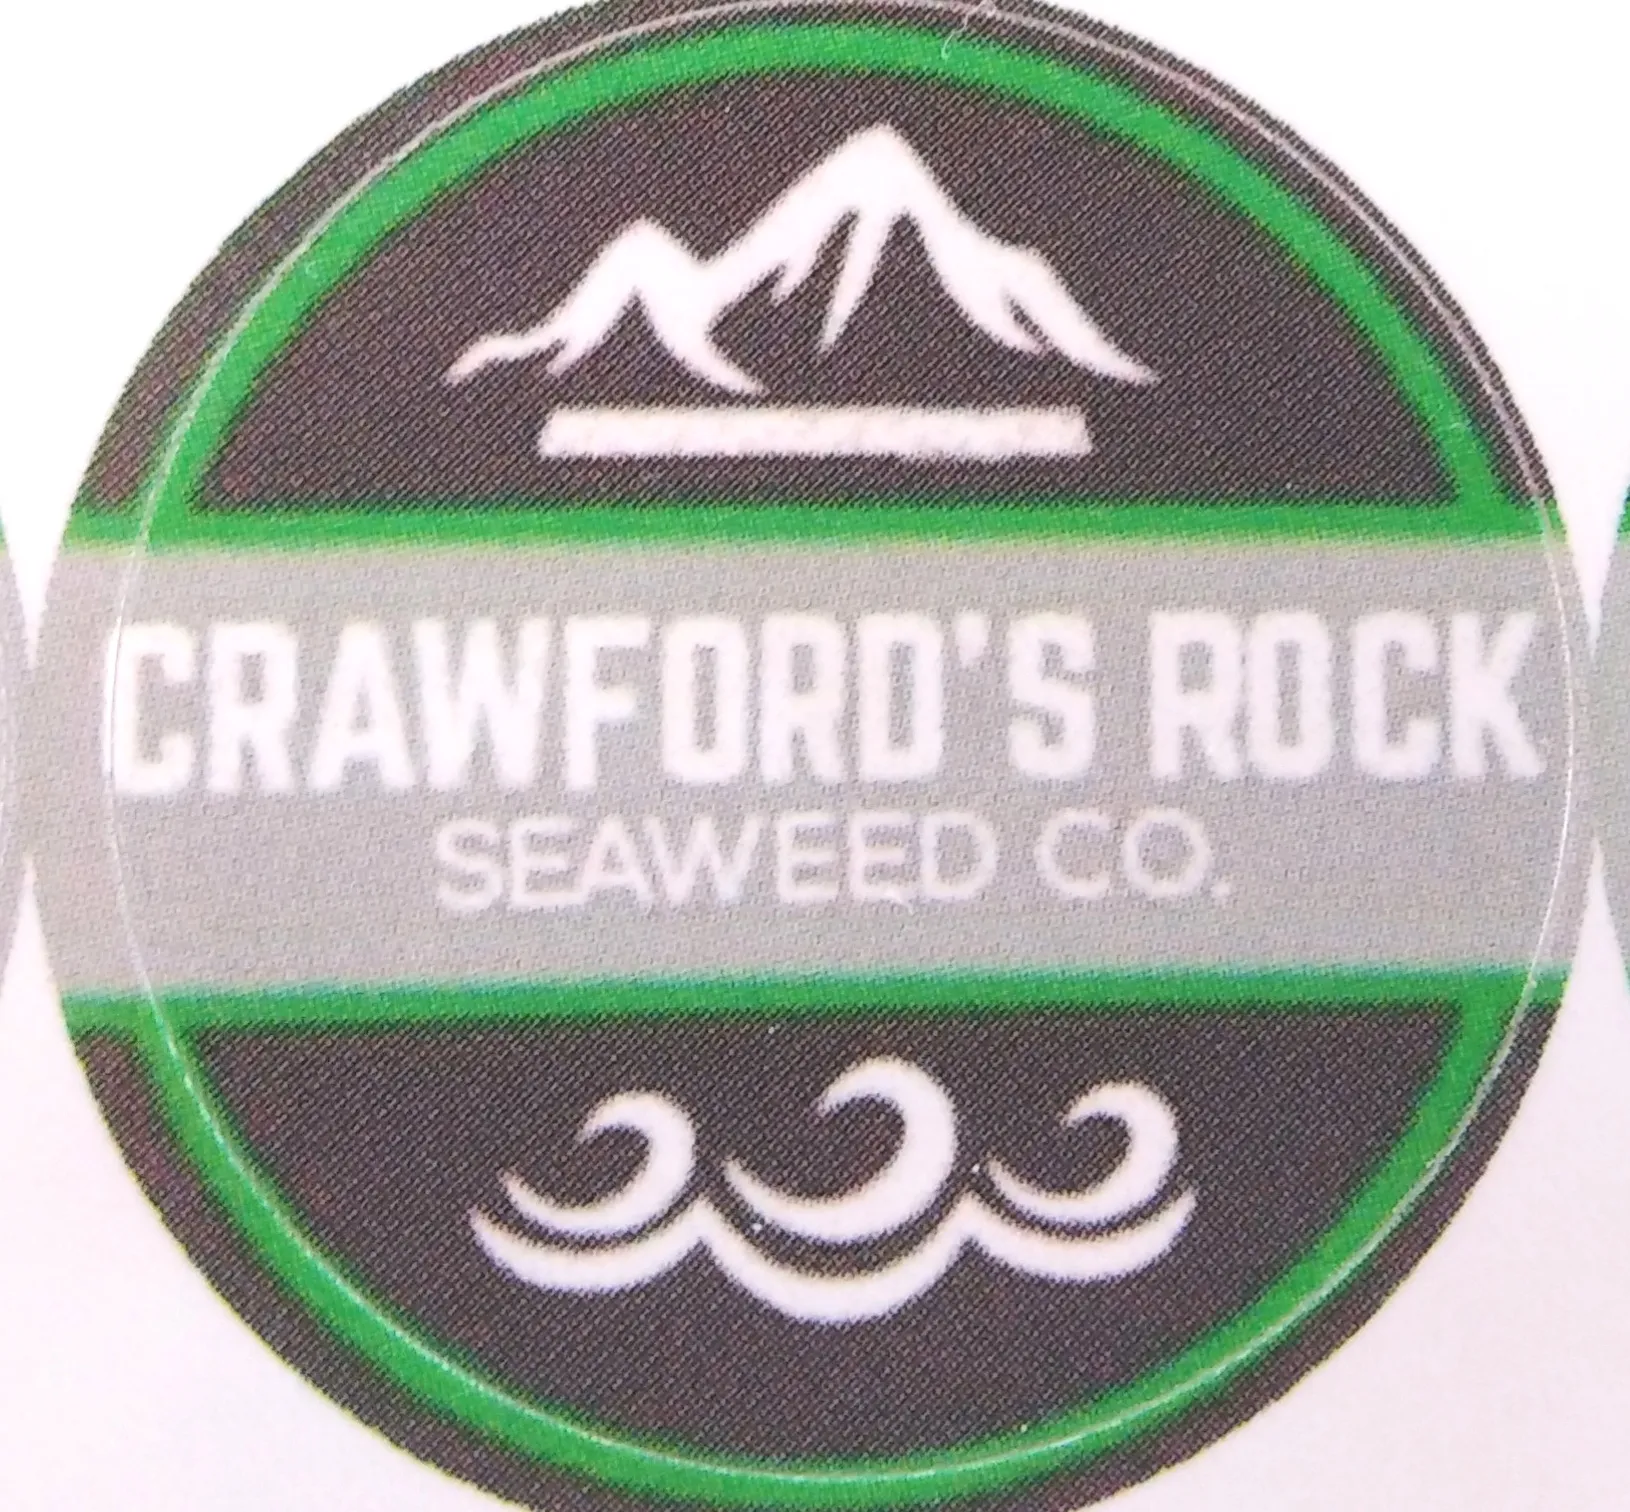 Crawford's Rock Seaweed